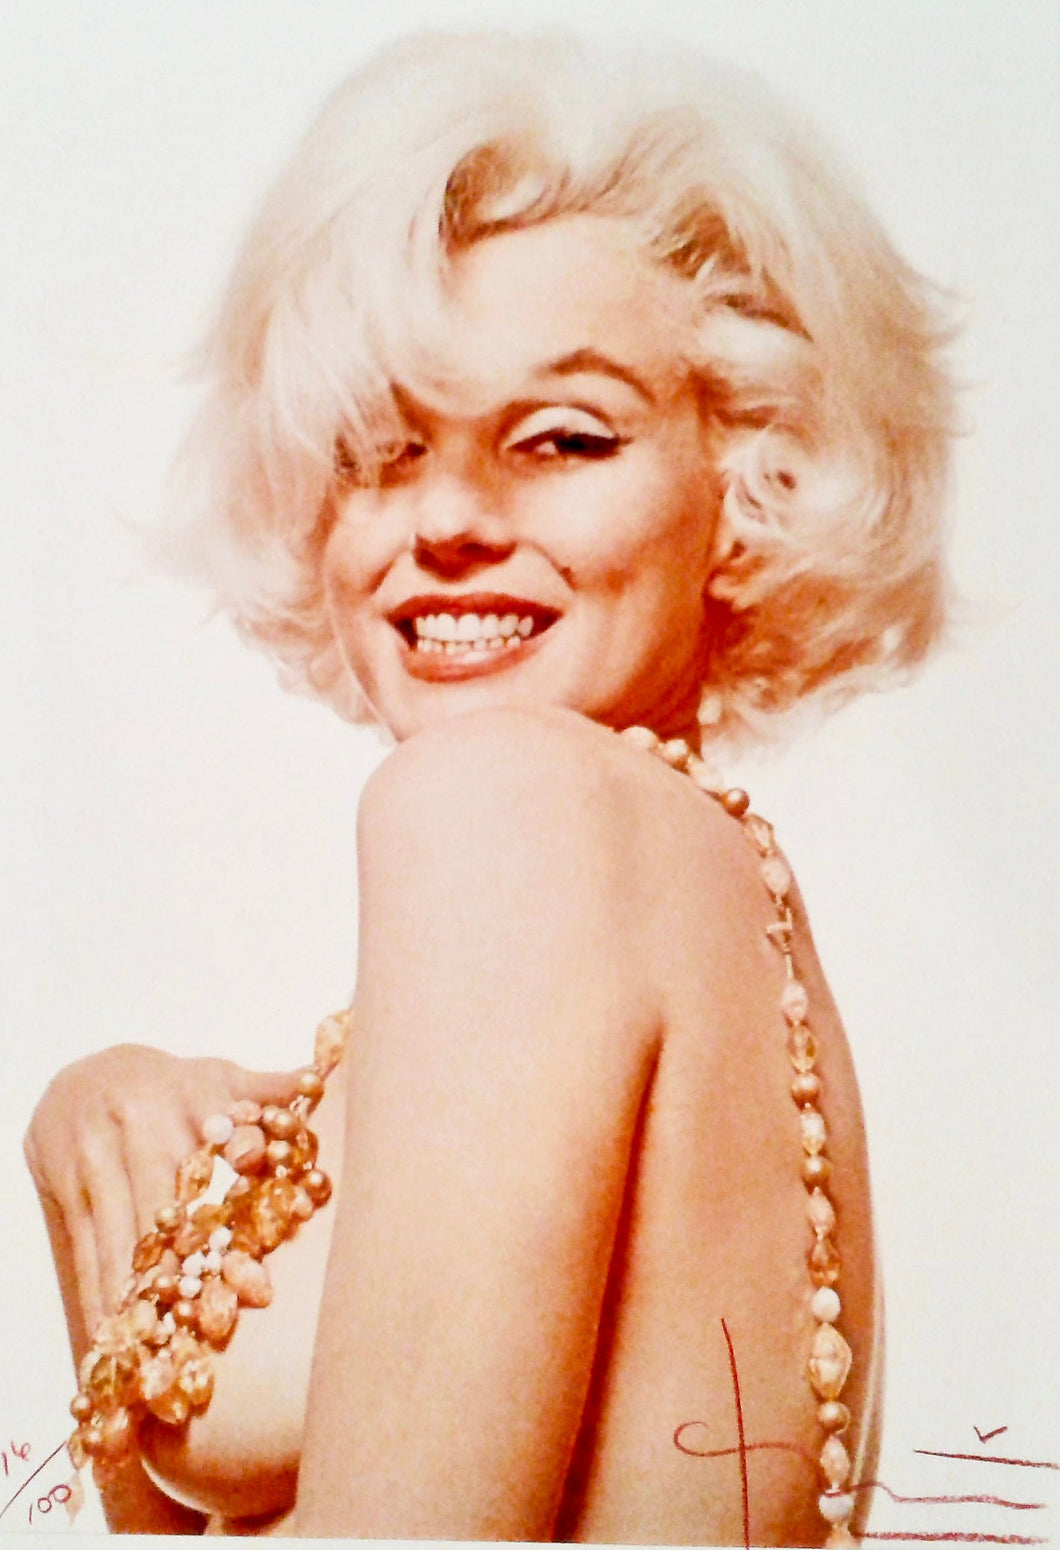 Marilyn Boob Smile, The Last Sitting Portrait Photo of Marilyn Monroe by Bert Stern